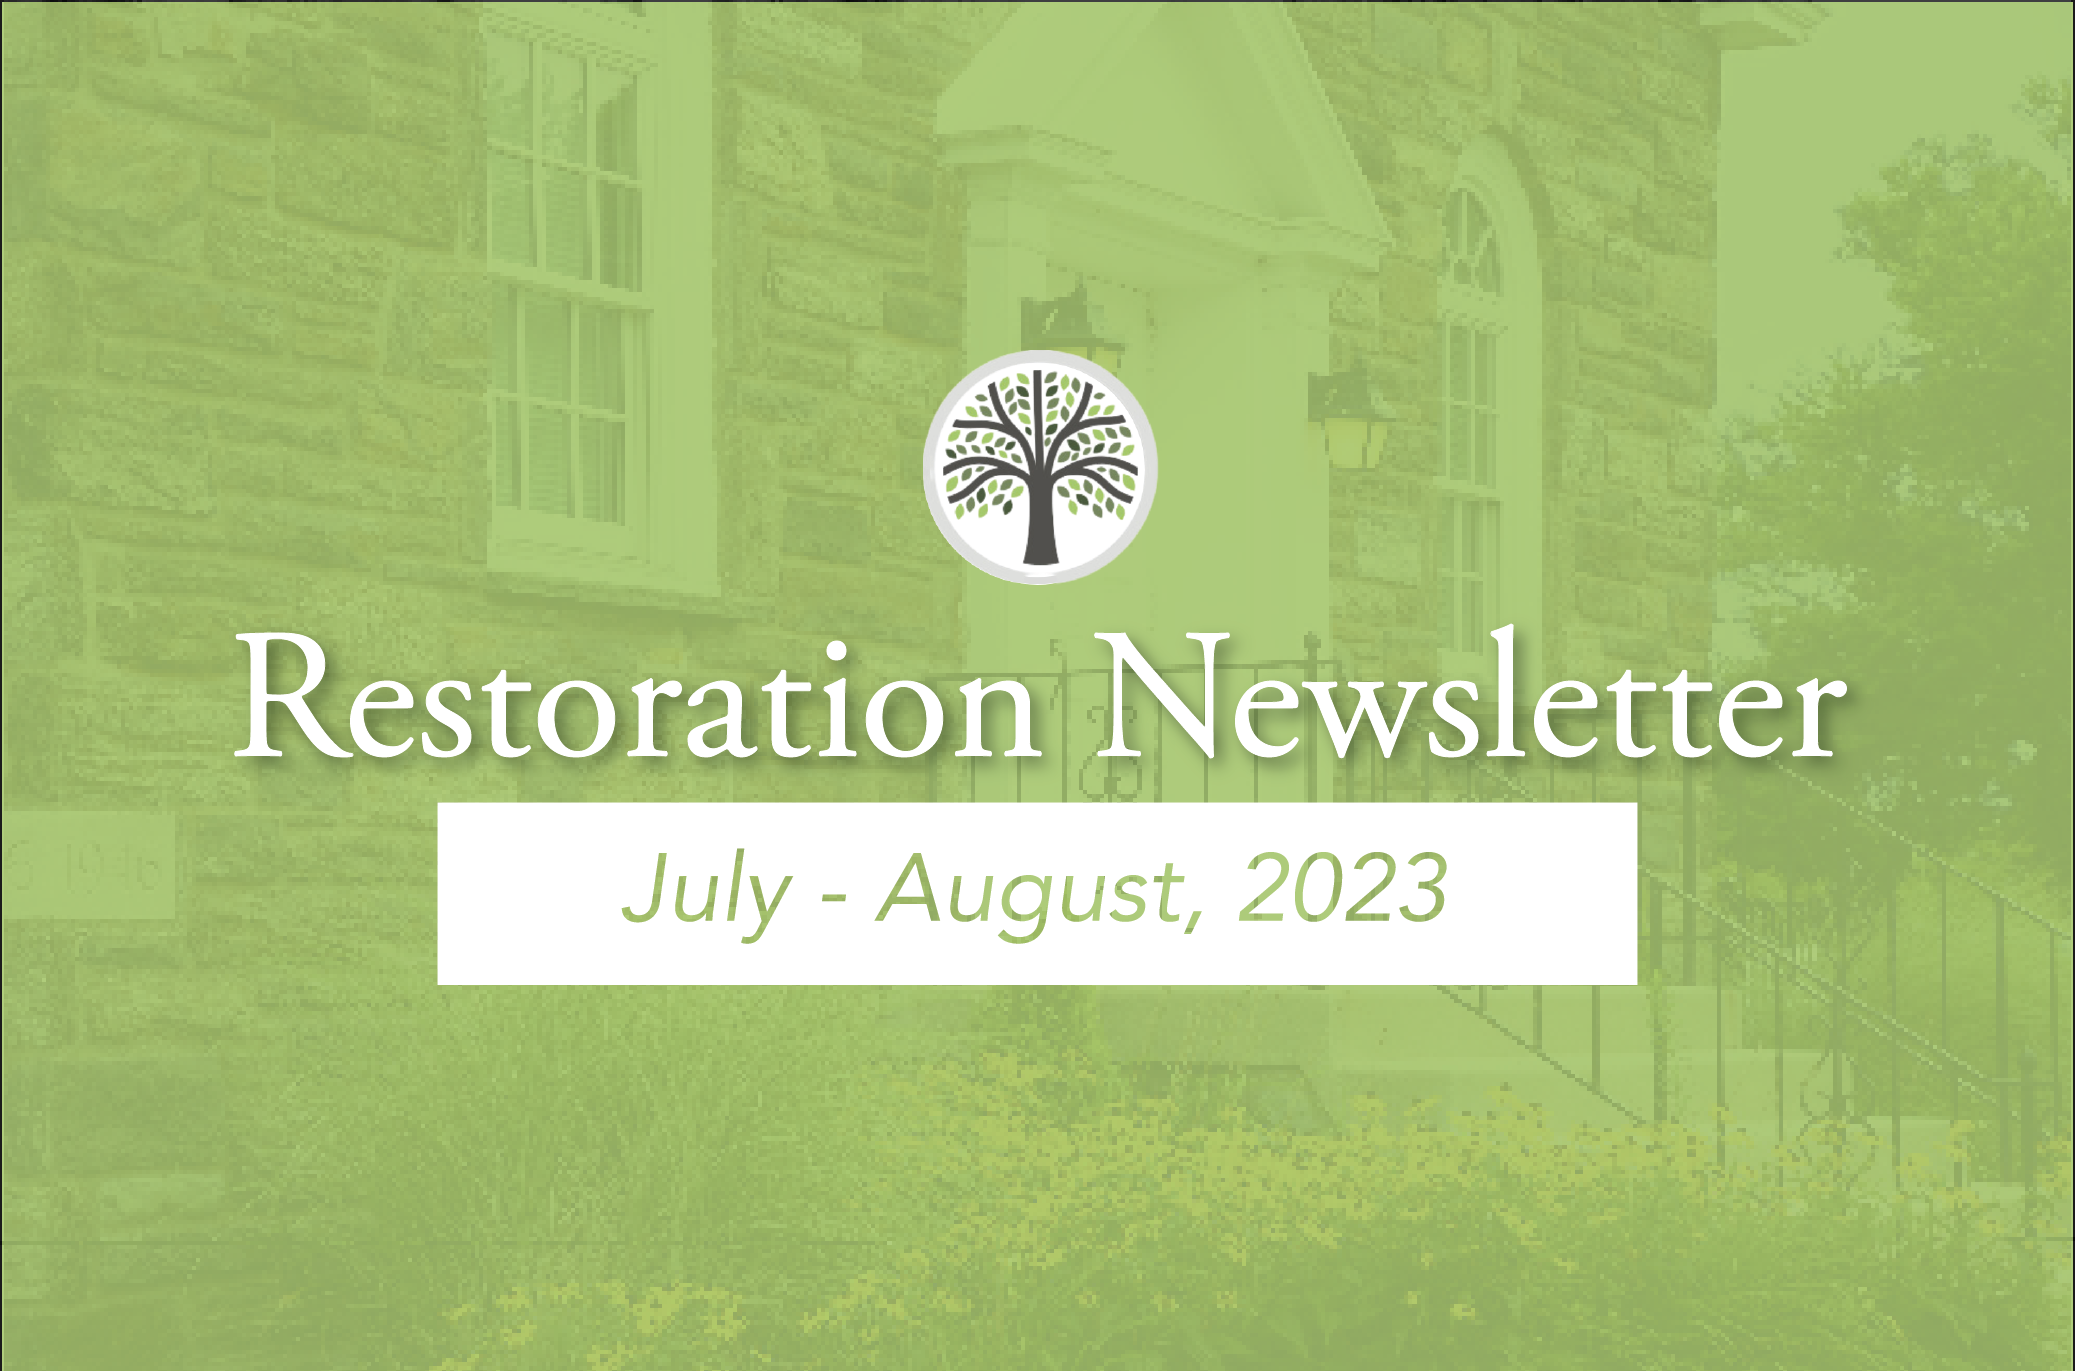 Restoration Newsletter Graphic.png